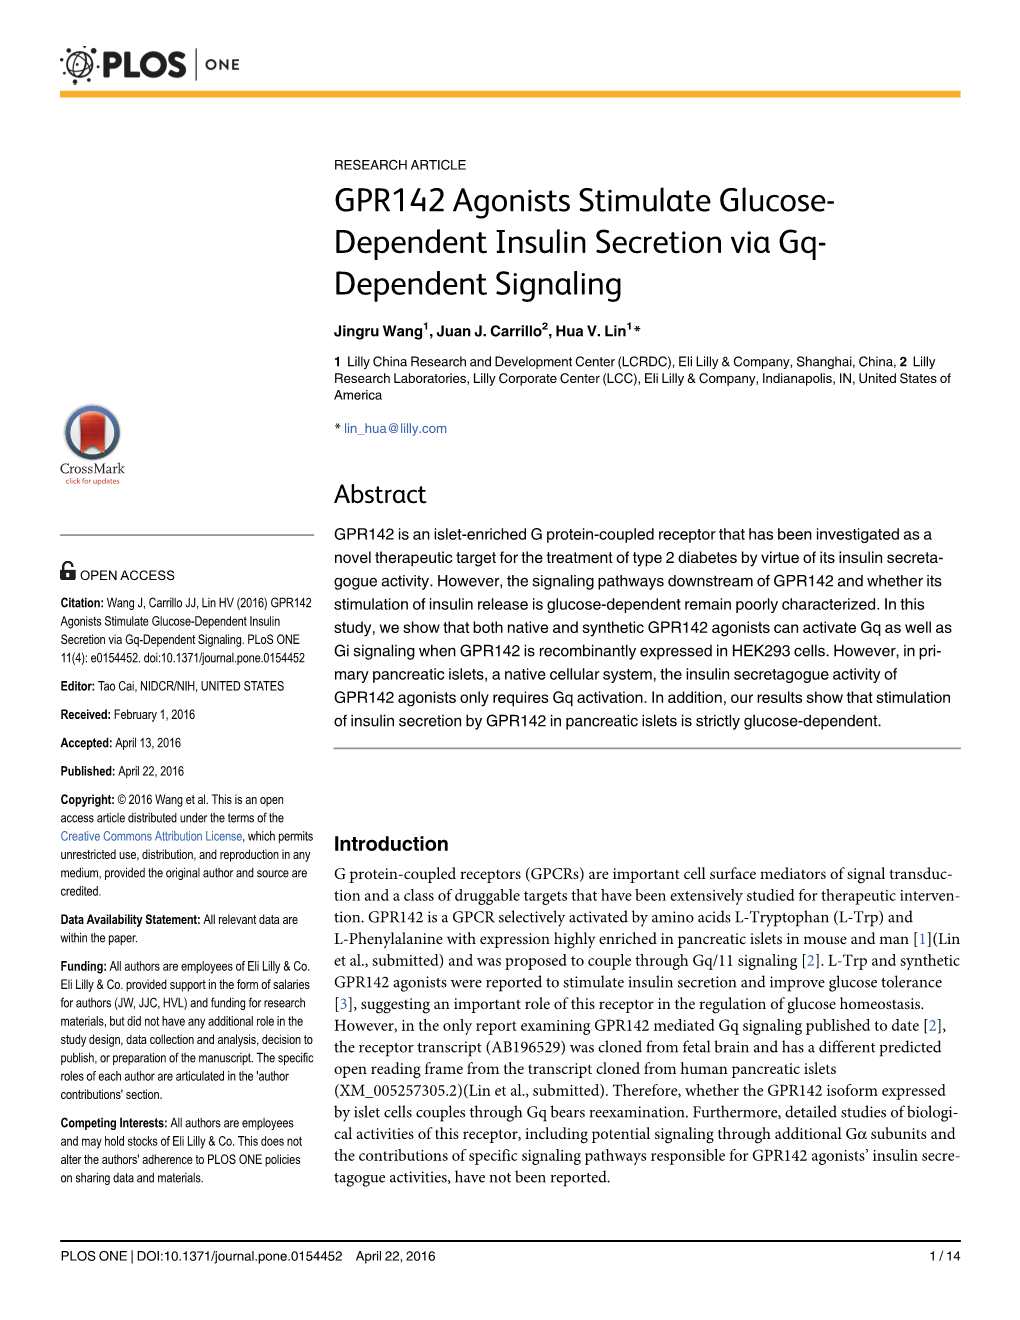 GPR142 Agonists Stimulate Glucose-Dependent Insulin Secretion Via Gq-Dependent Signaling